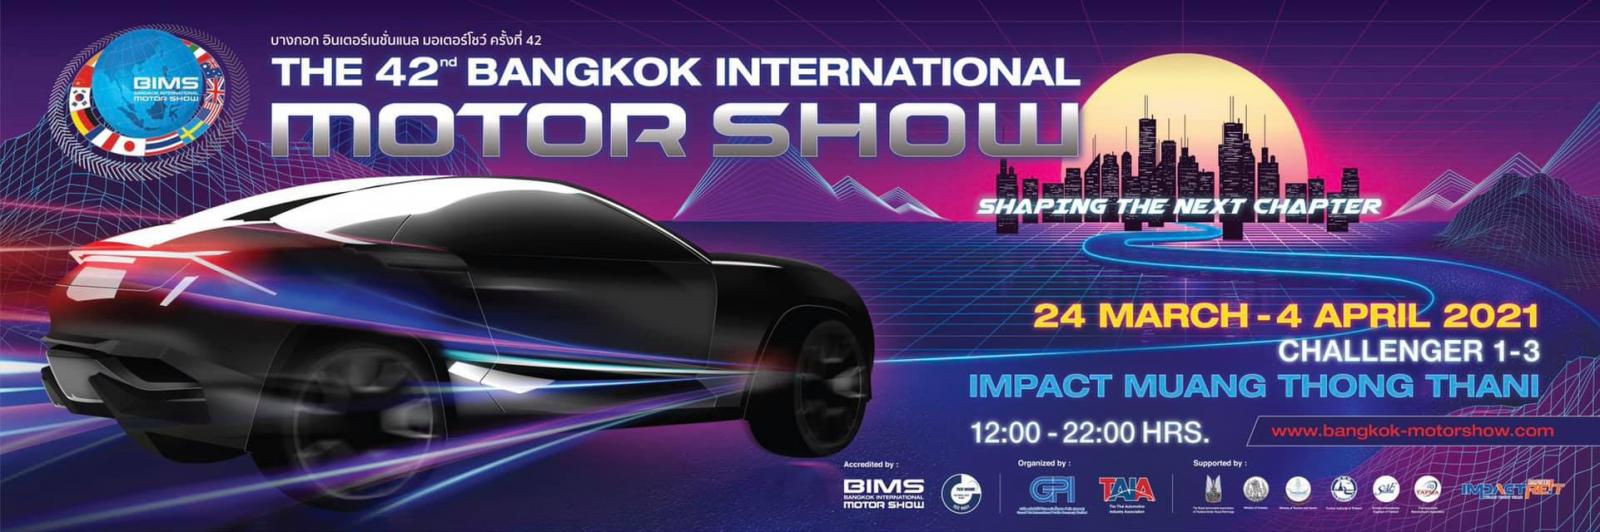 Motor Show 2021